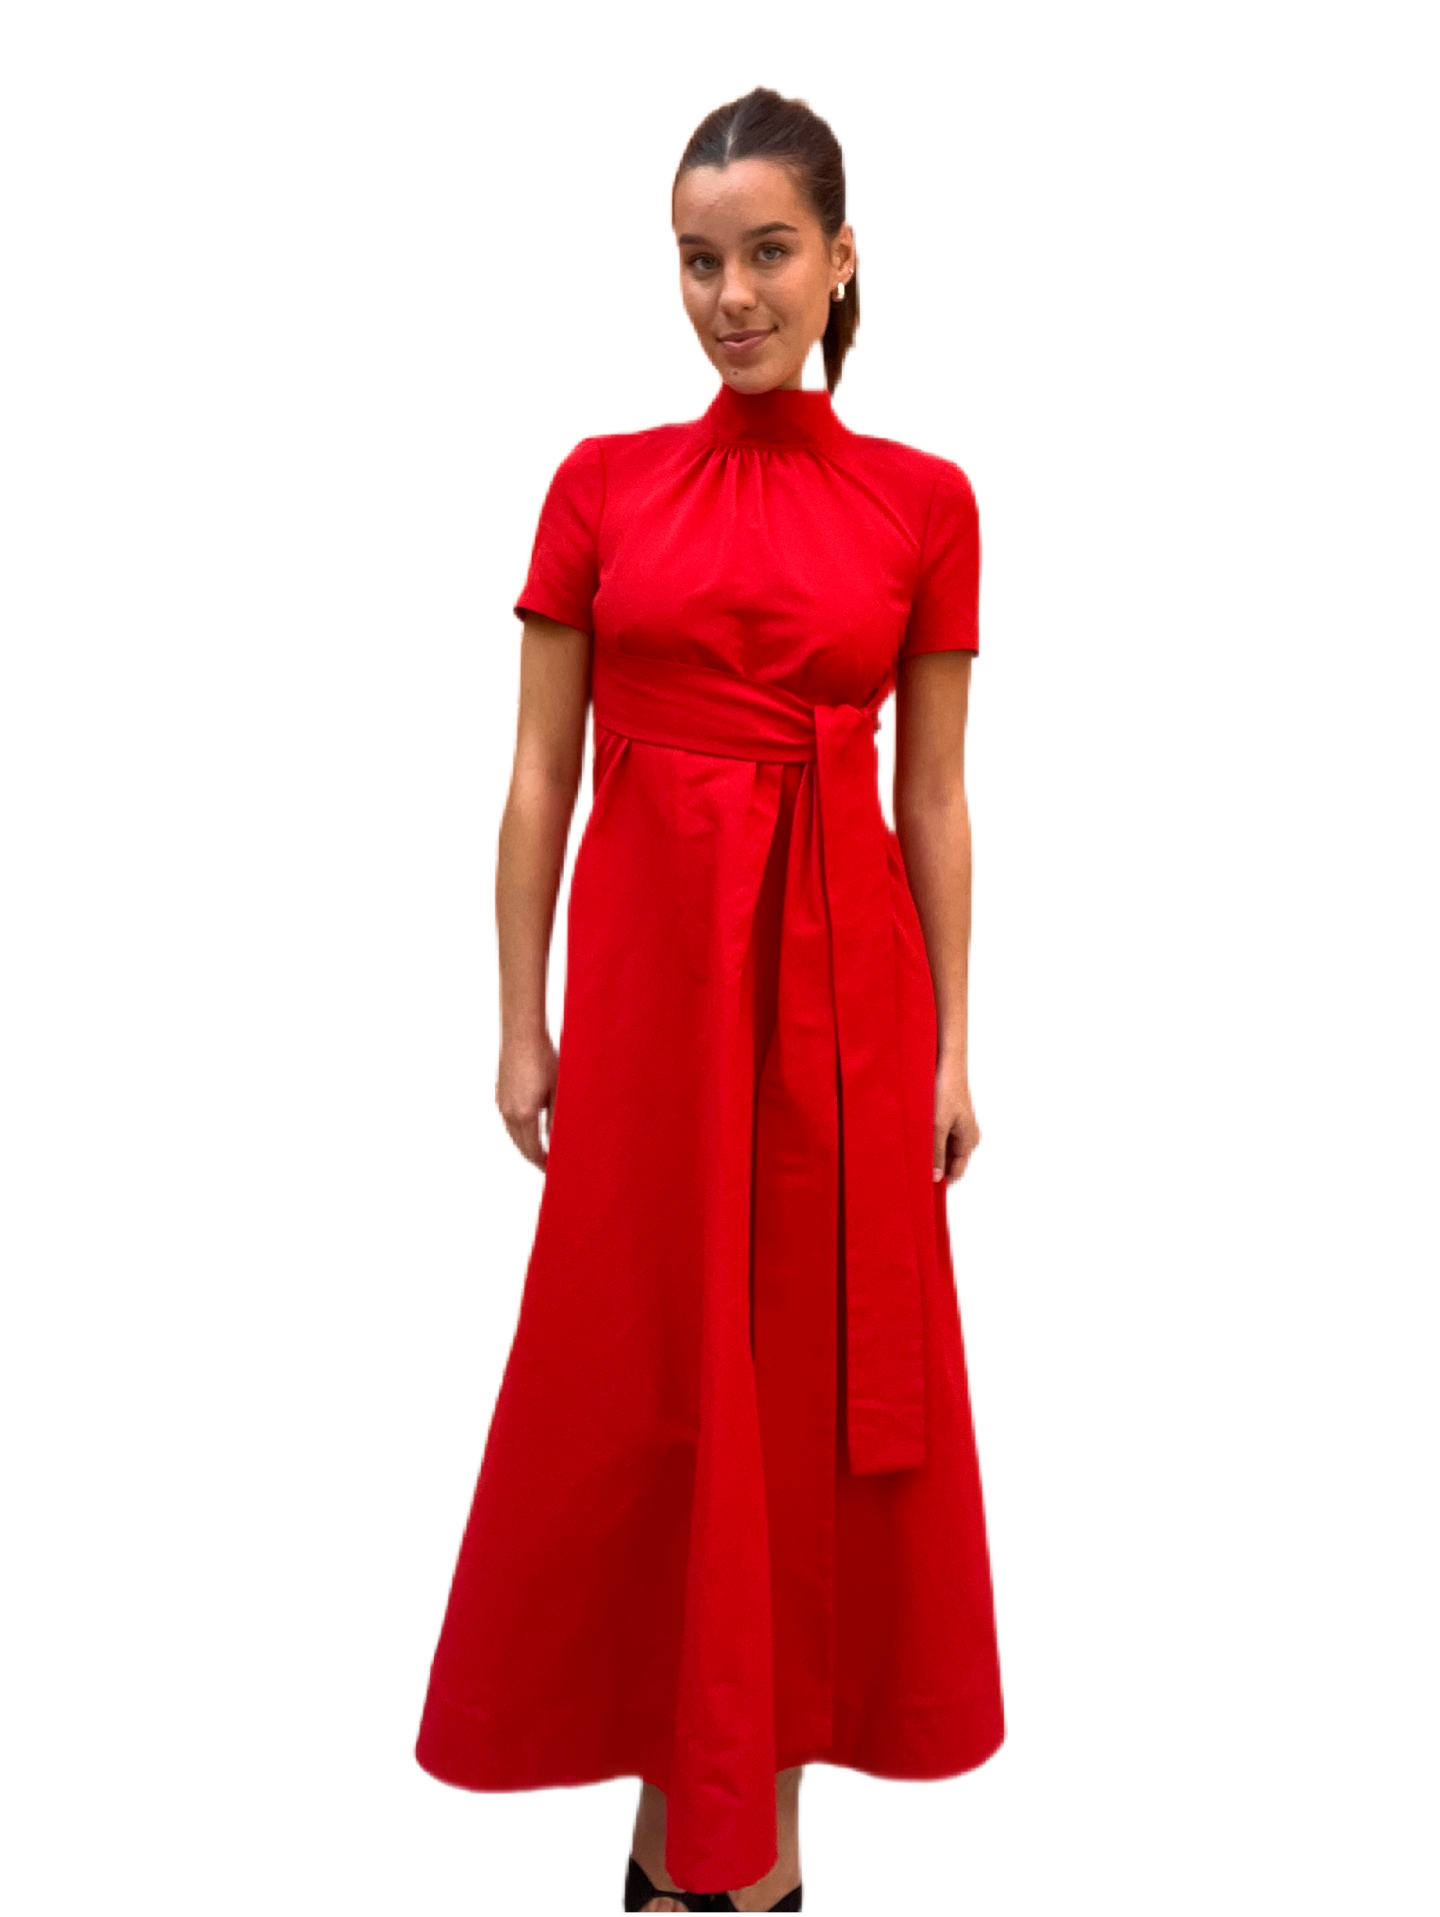 Staud Red Cap Sleeve Maxi Dress w Neck Sash. Size: Small